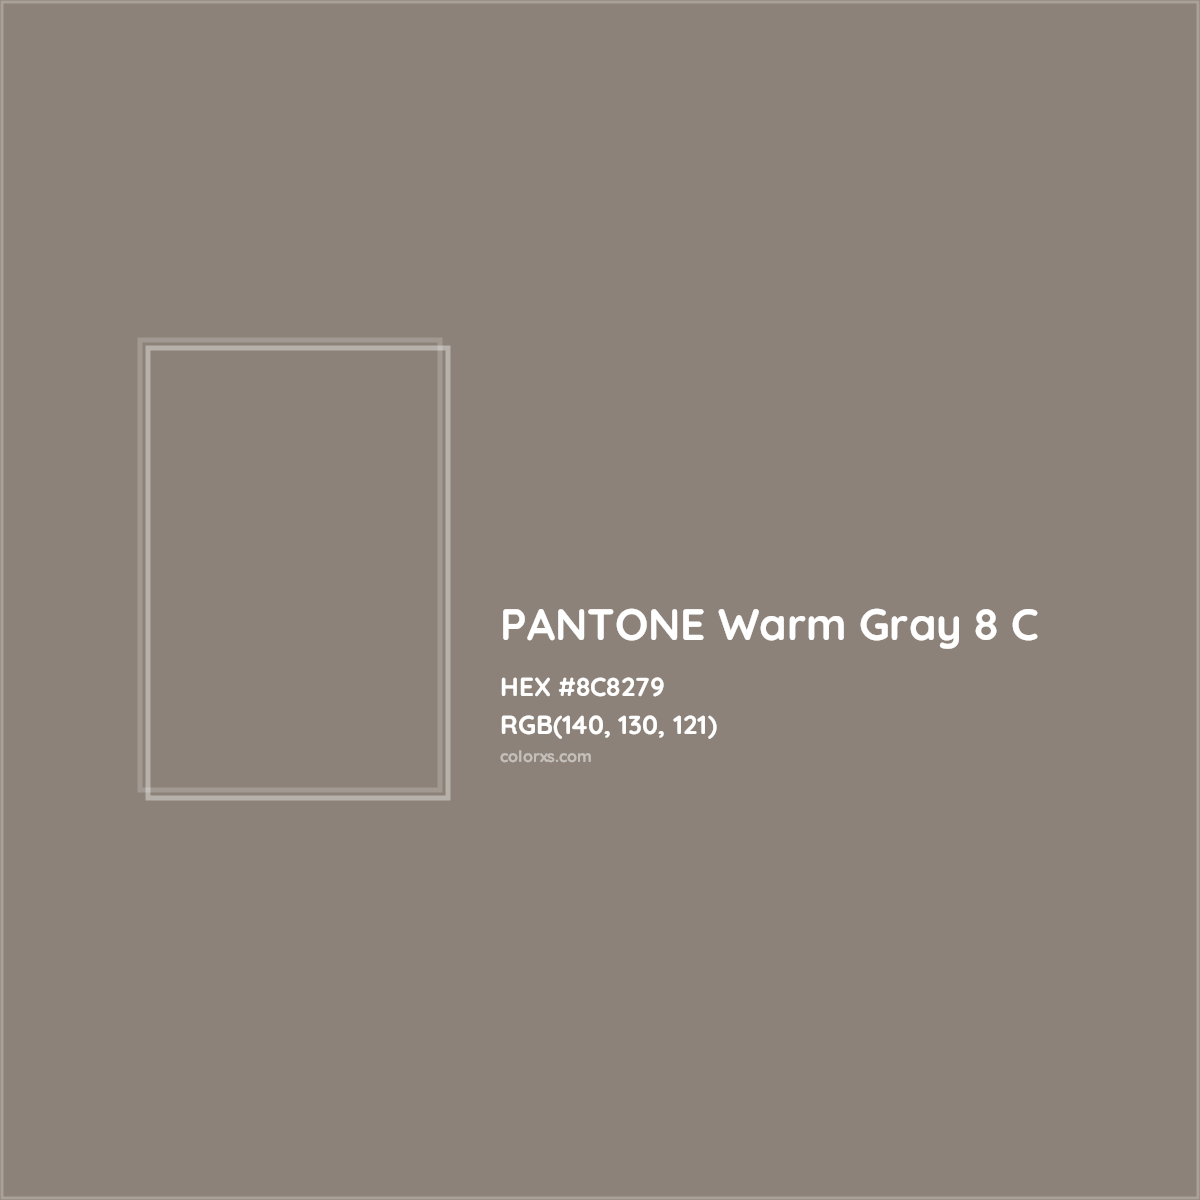 HEX #8C8279 PANTONE Warm Gray 8 C CMS Pantone PMS - Color Code